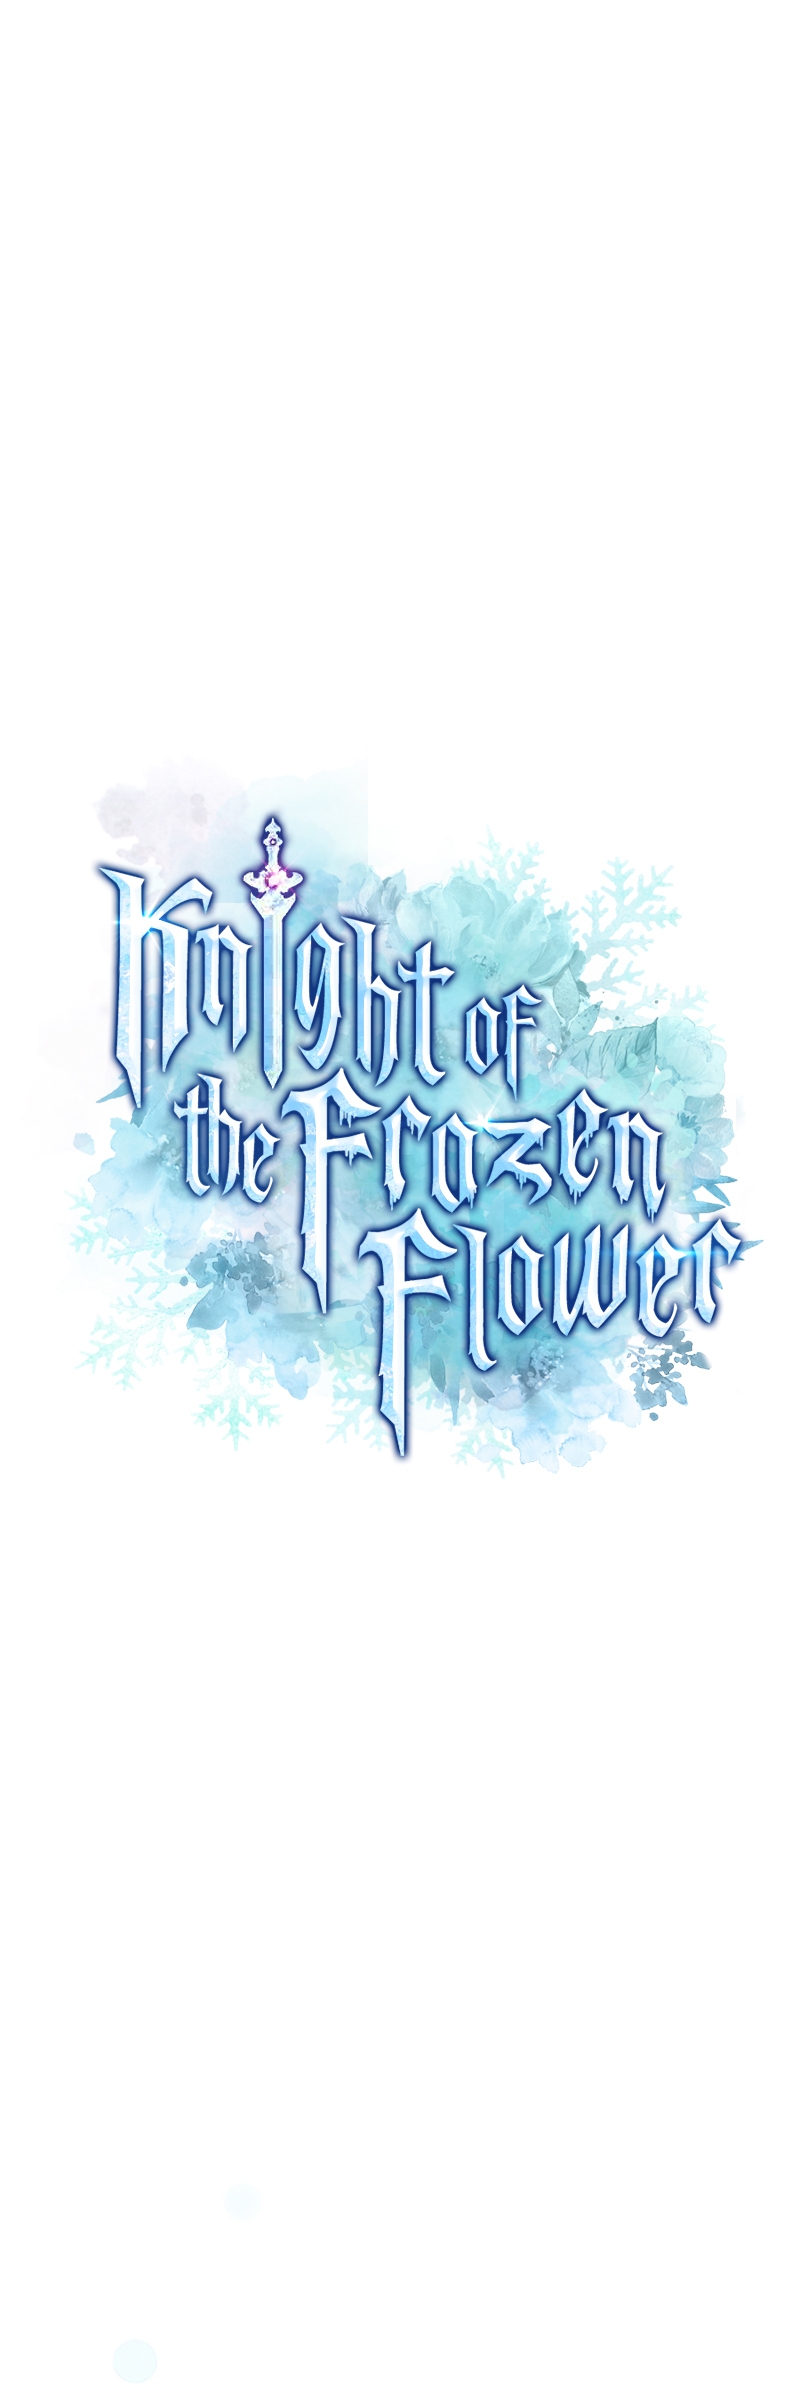 Knight of the Frozen Flower 35 22